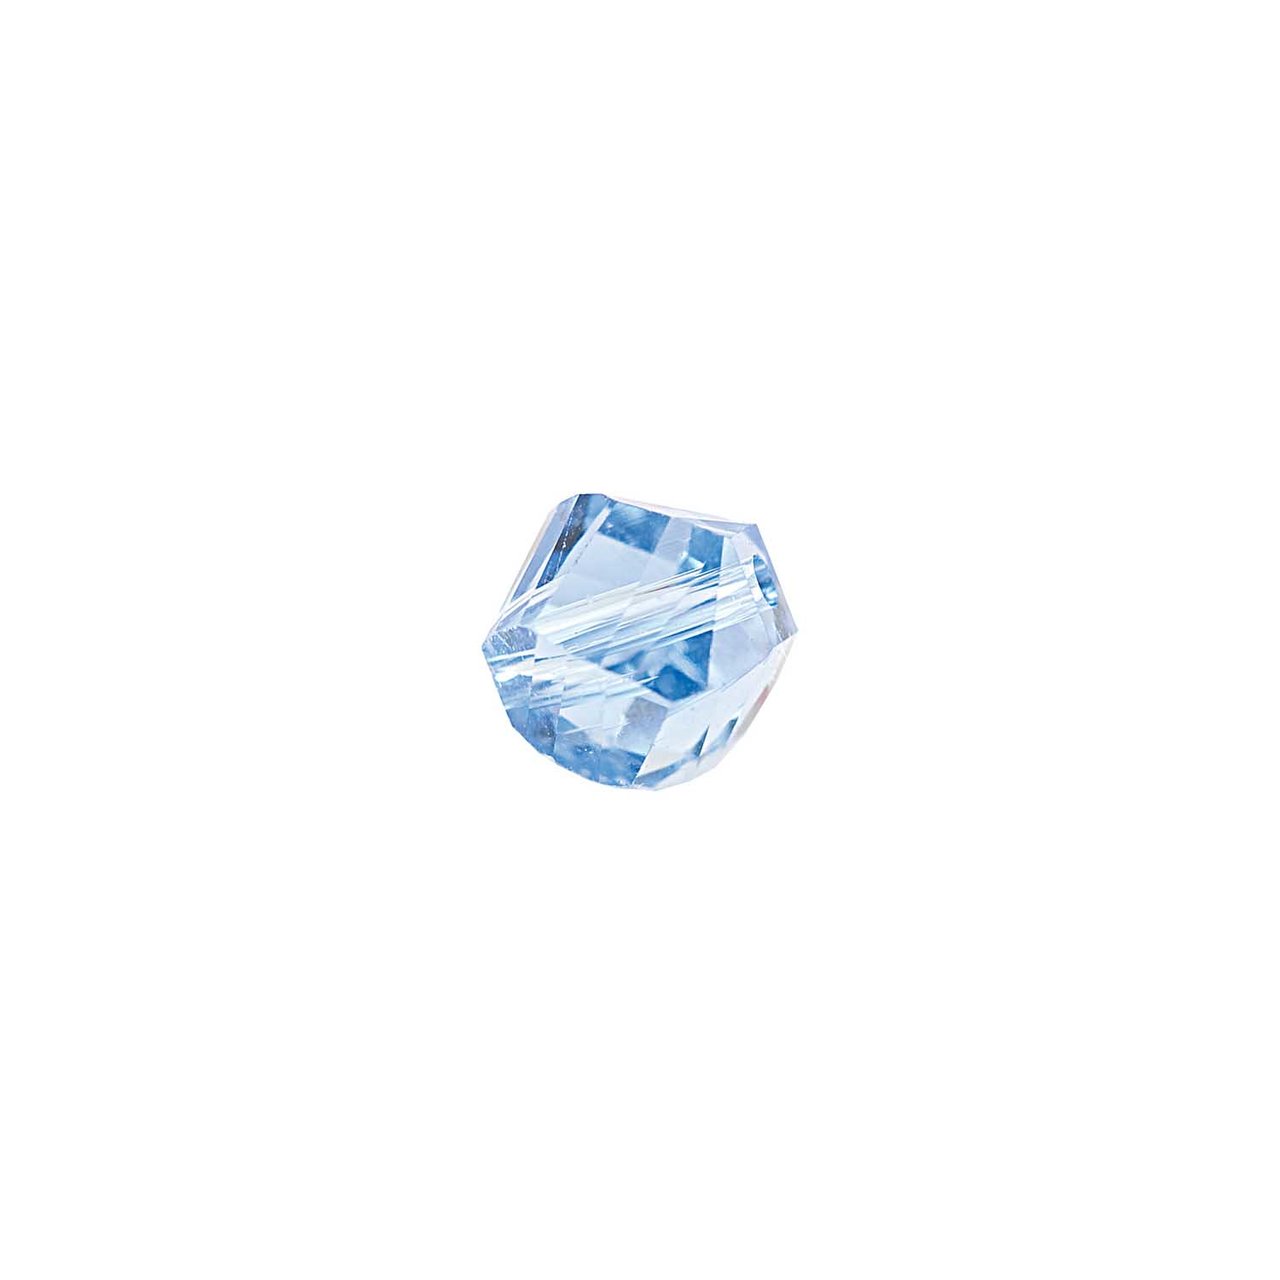 Rico Design Glasschliff-Kandis Perlen 6mm 12 Stück aqua